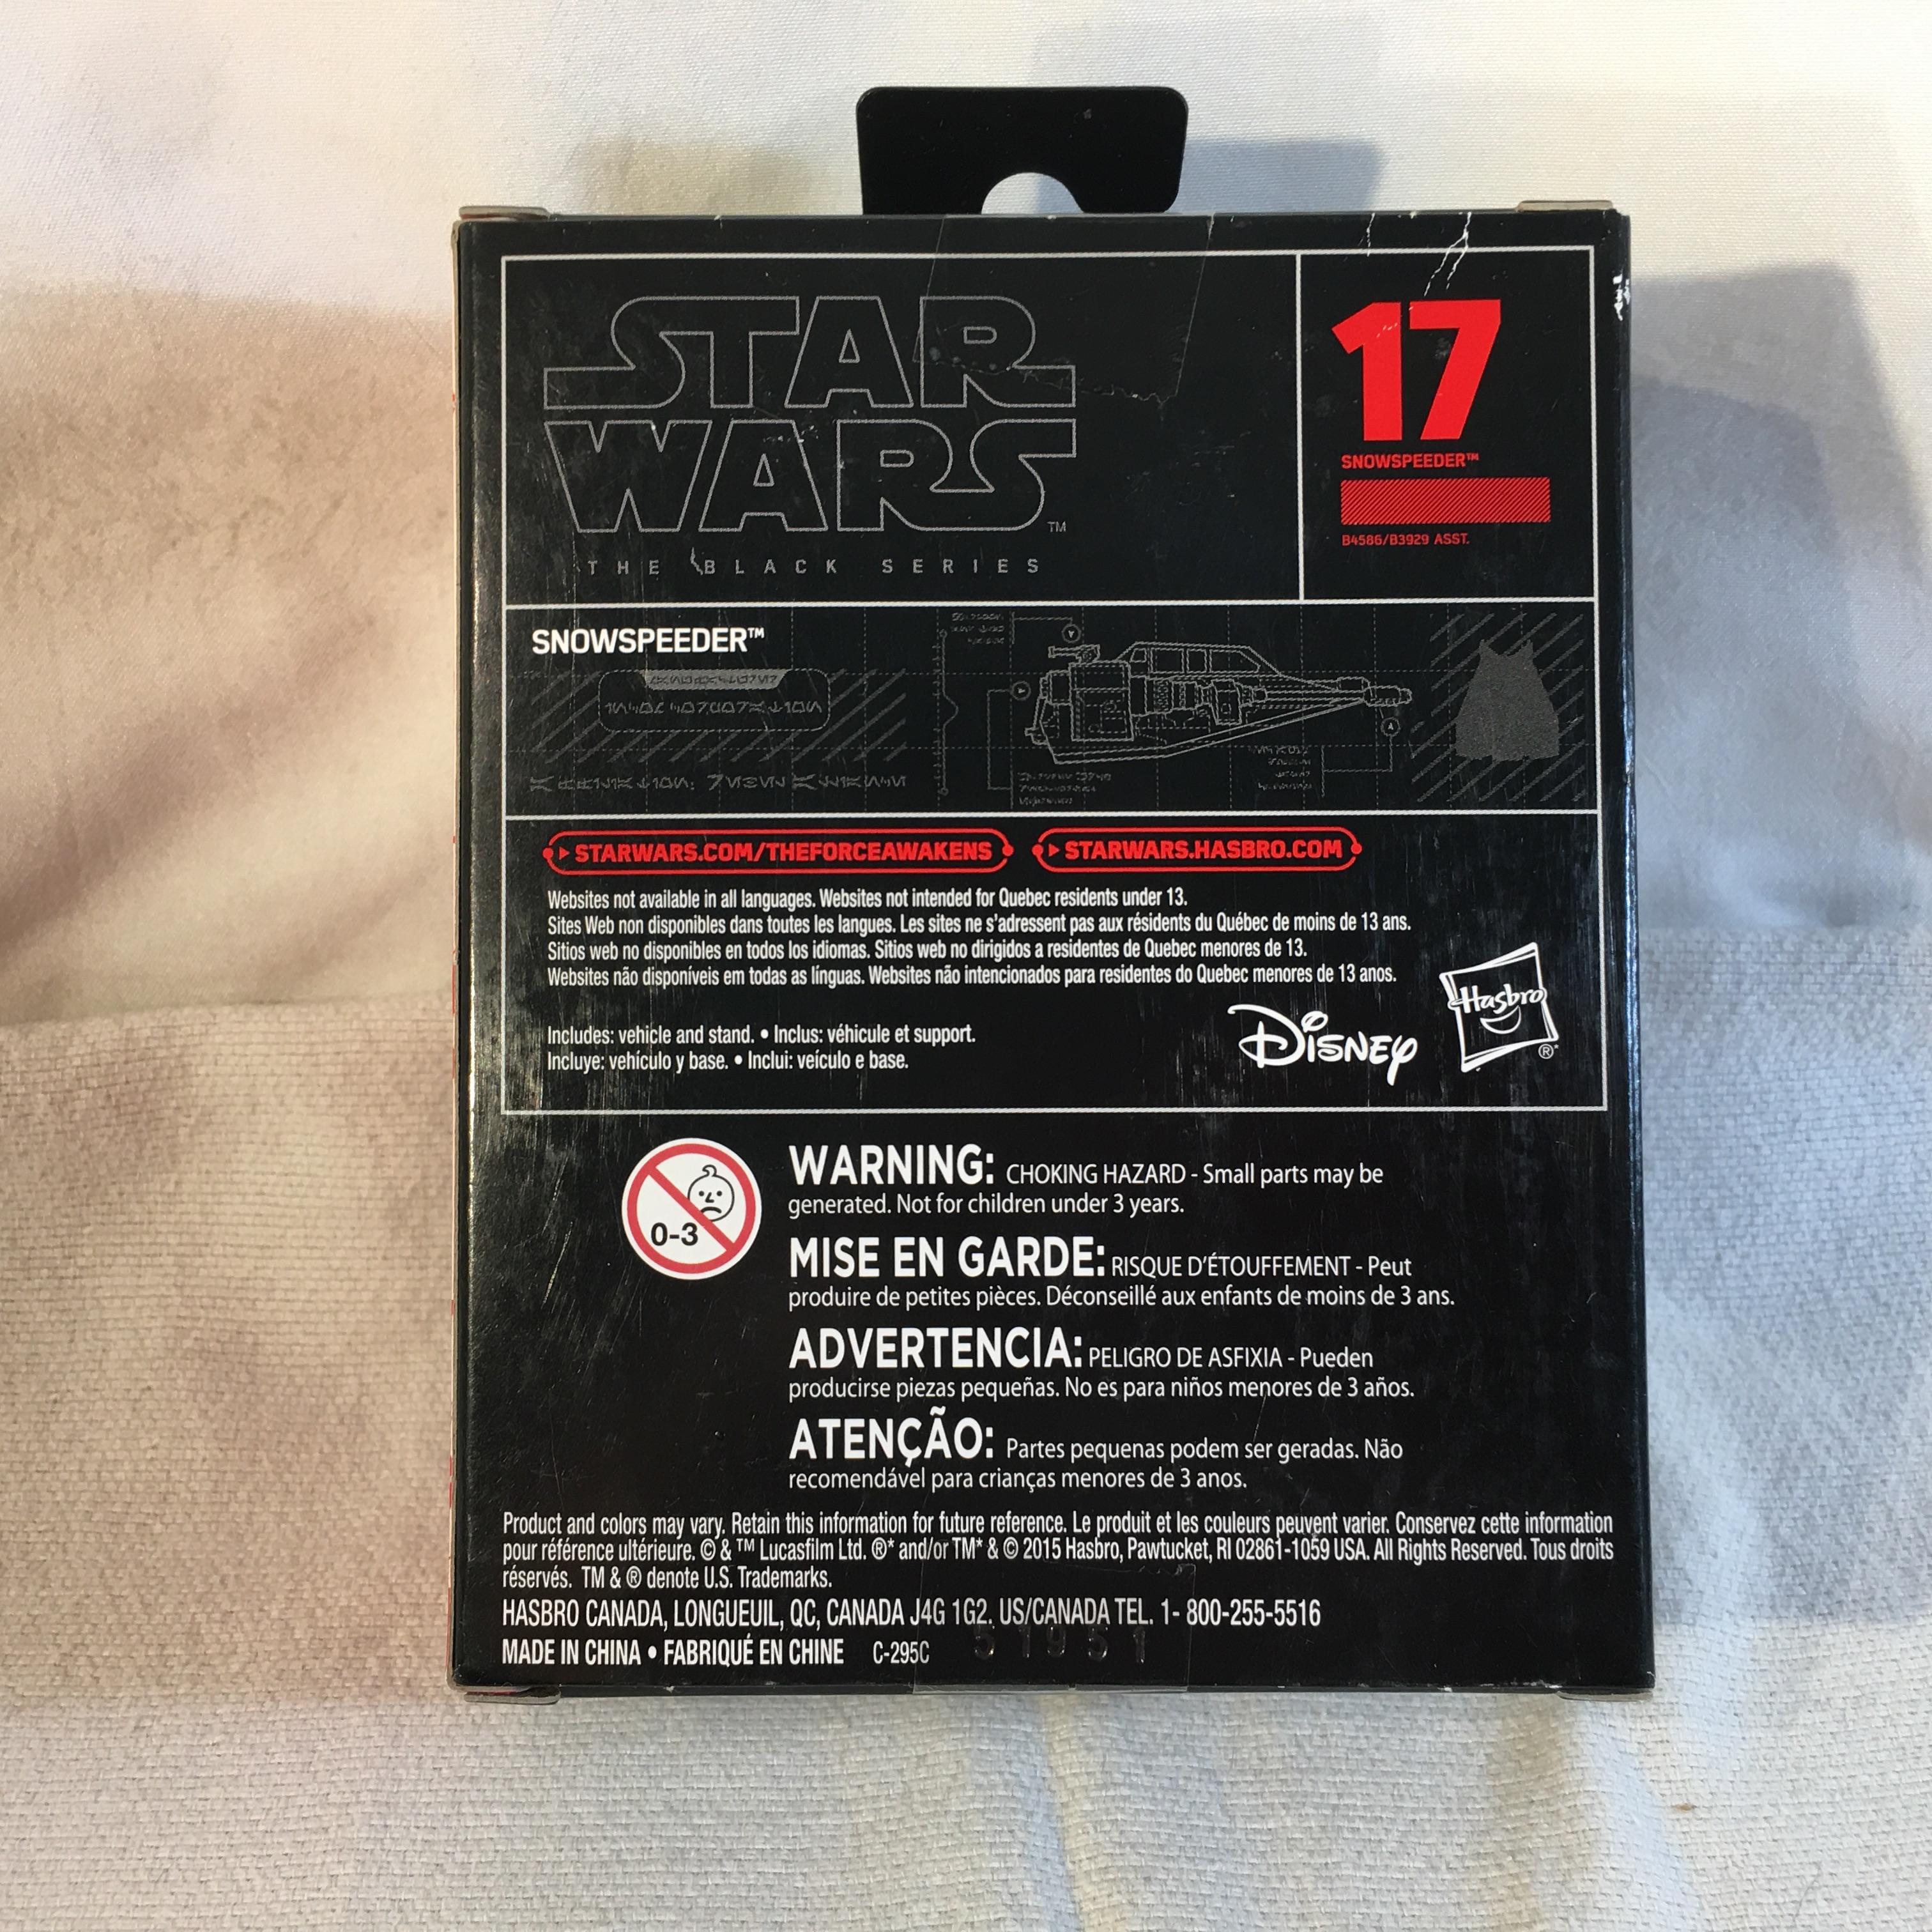 NIB Collector Star Wars The Black Series Titanium Series Snowspeeder #17  Box Size:5x4"